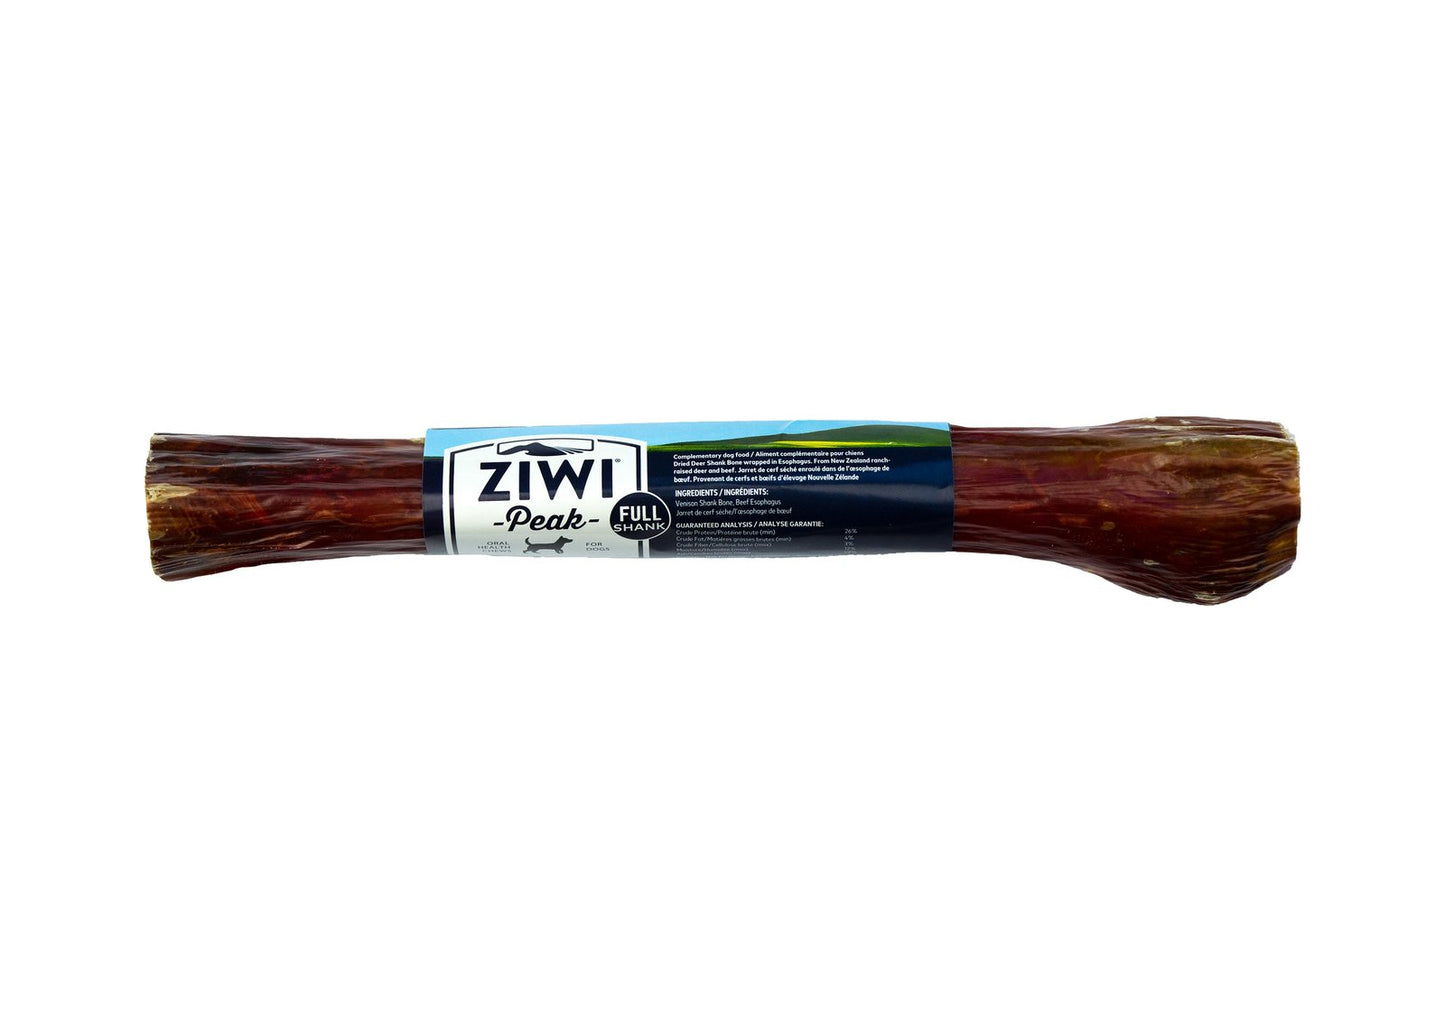 ZIWI Deer Shank Bone Full (beef esophagus top wrapped) Dog Chews